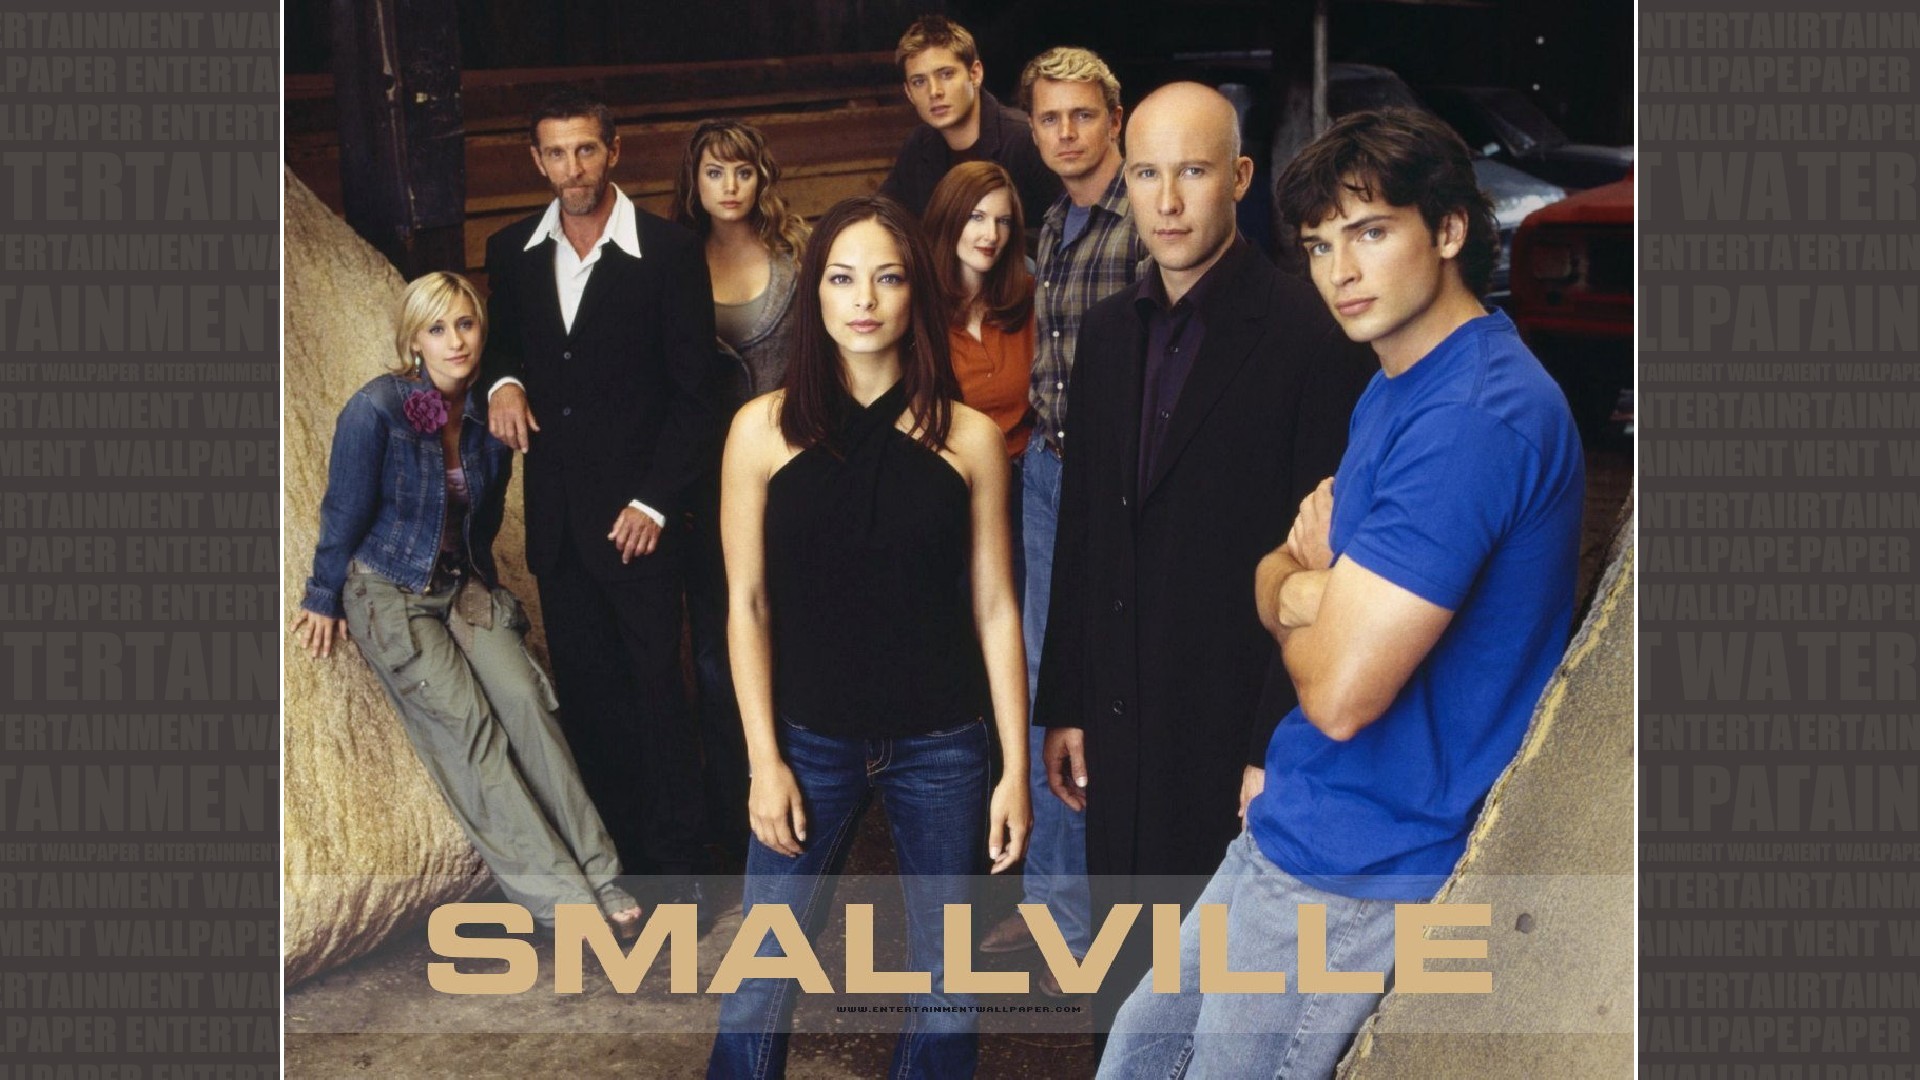 1920x1080 Smallville Wallpaper - Original size, download now.